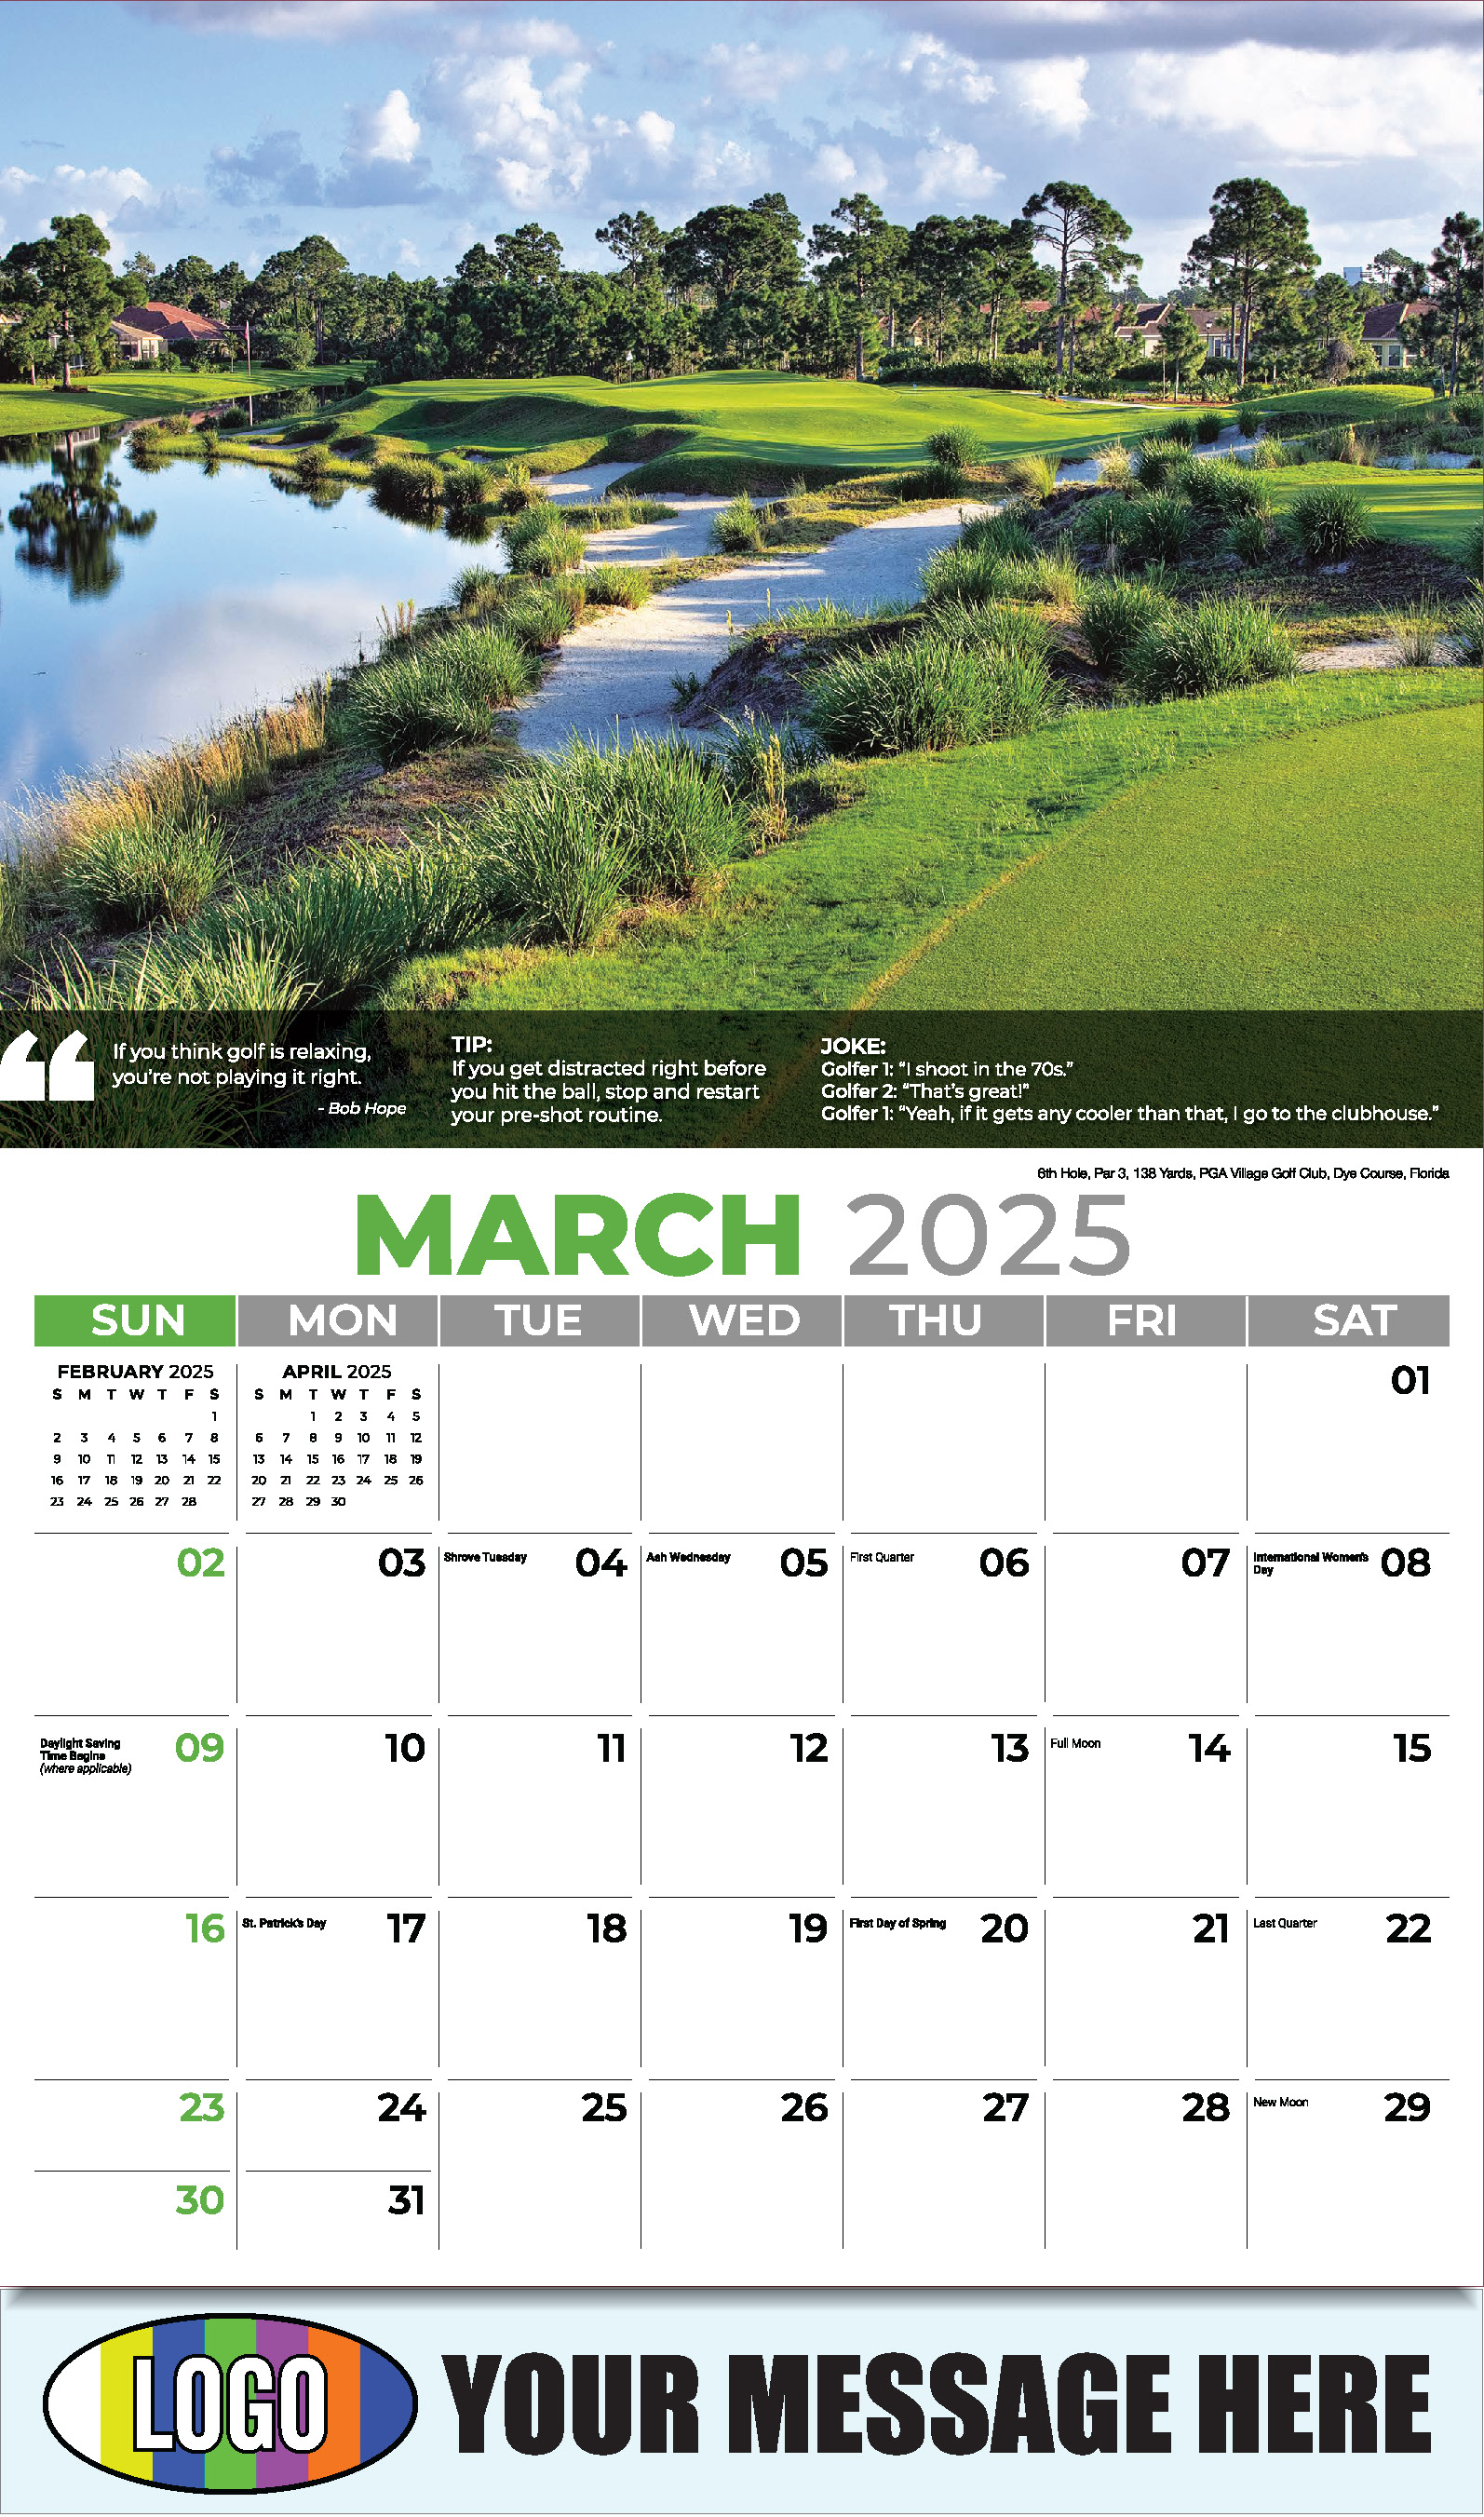 Golf Tips 2025 Business Promo Calendar - March